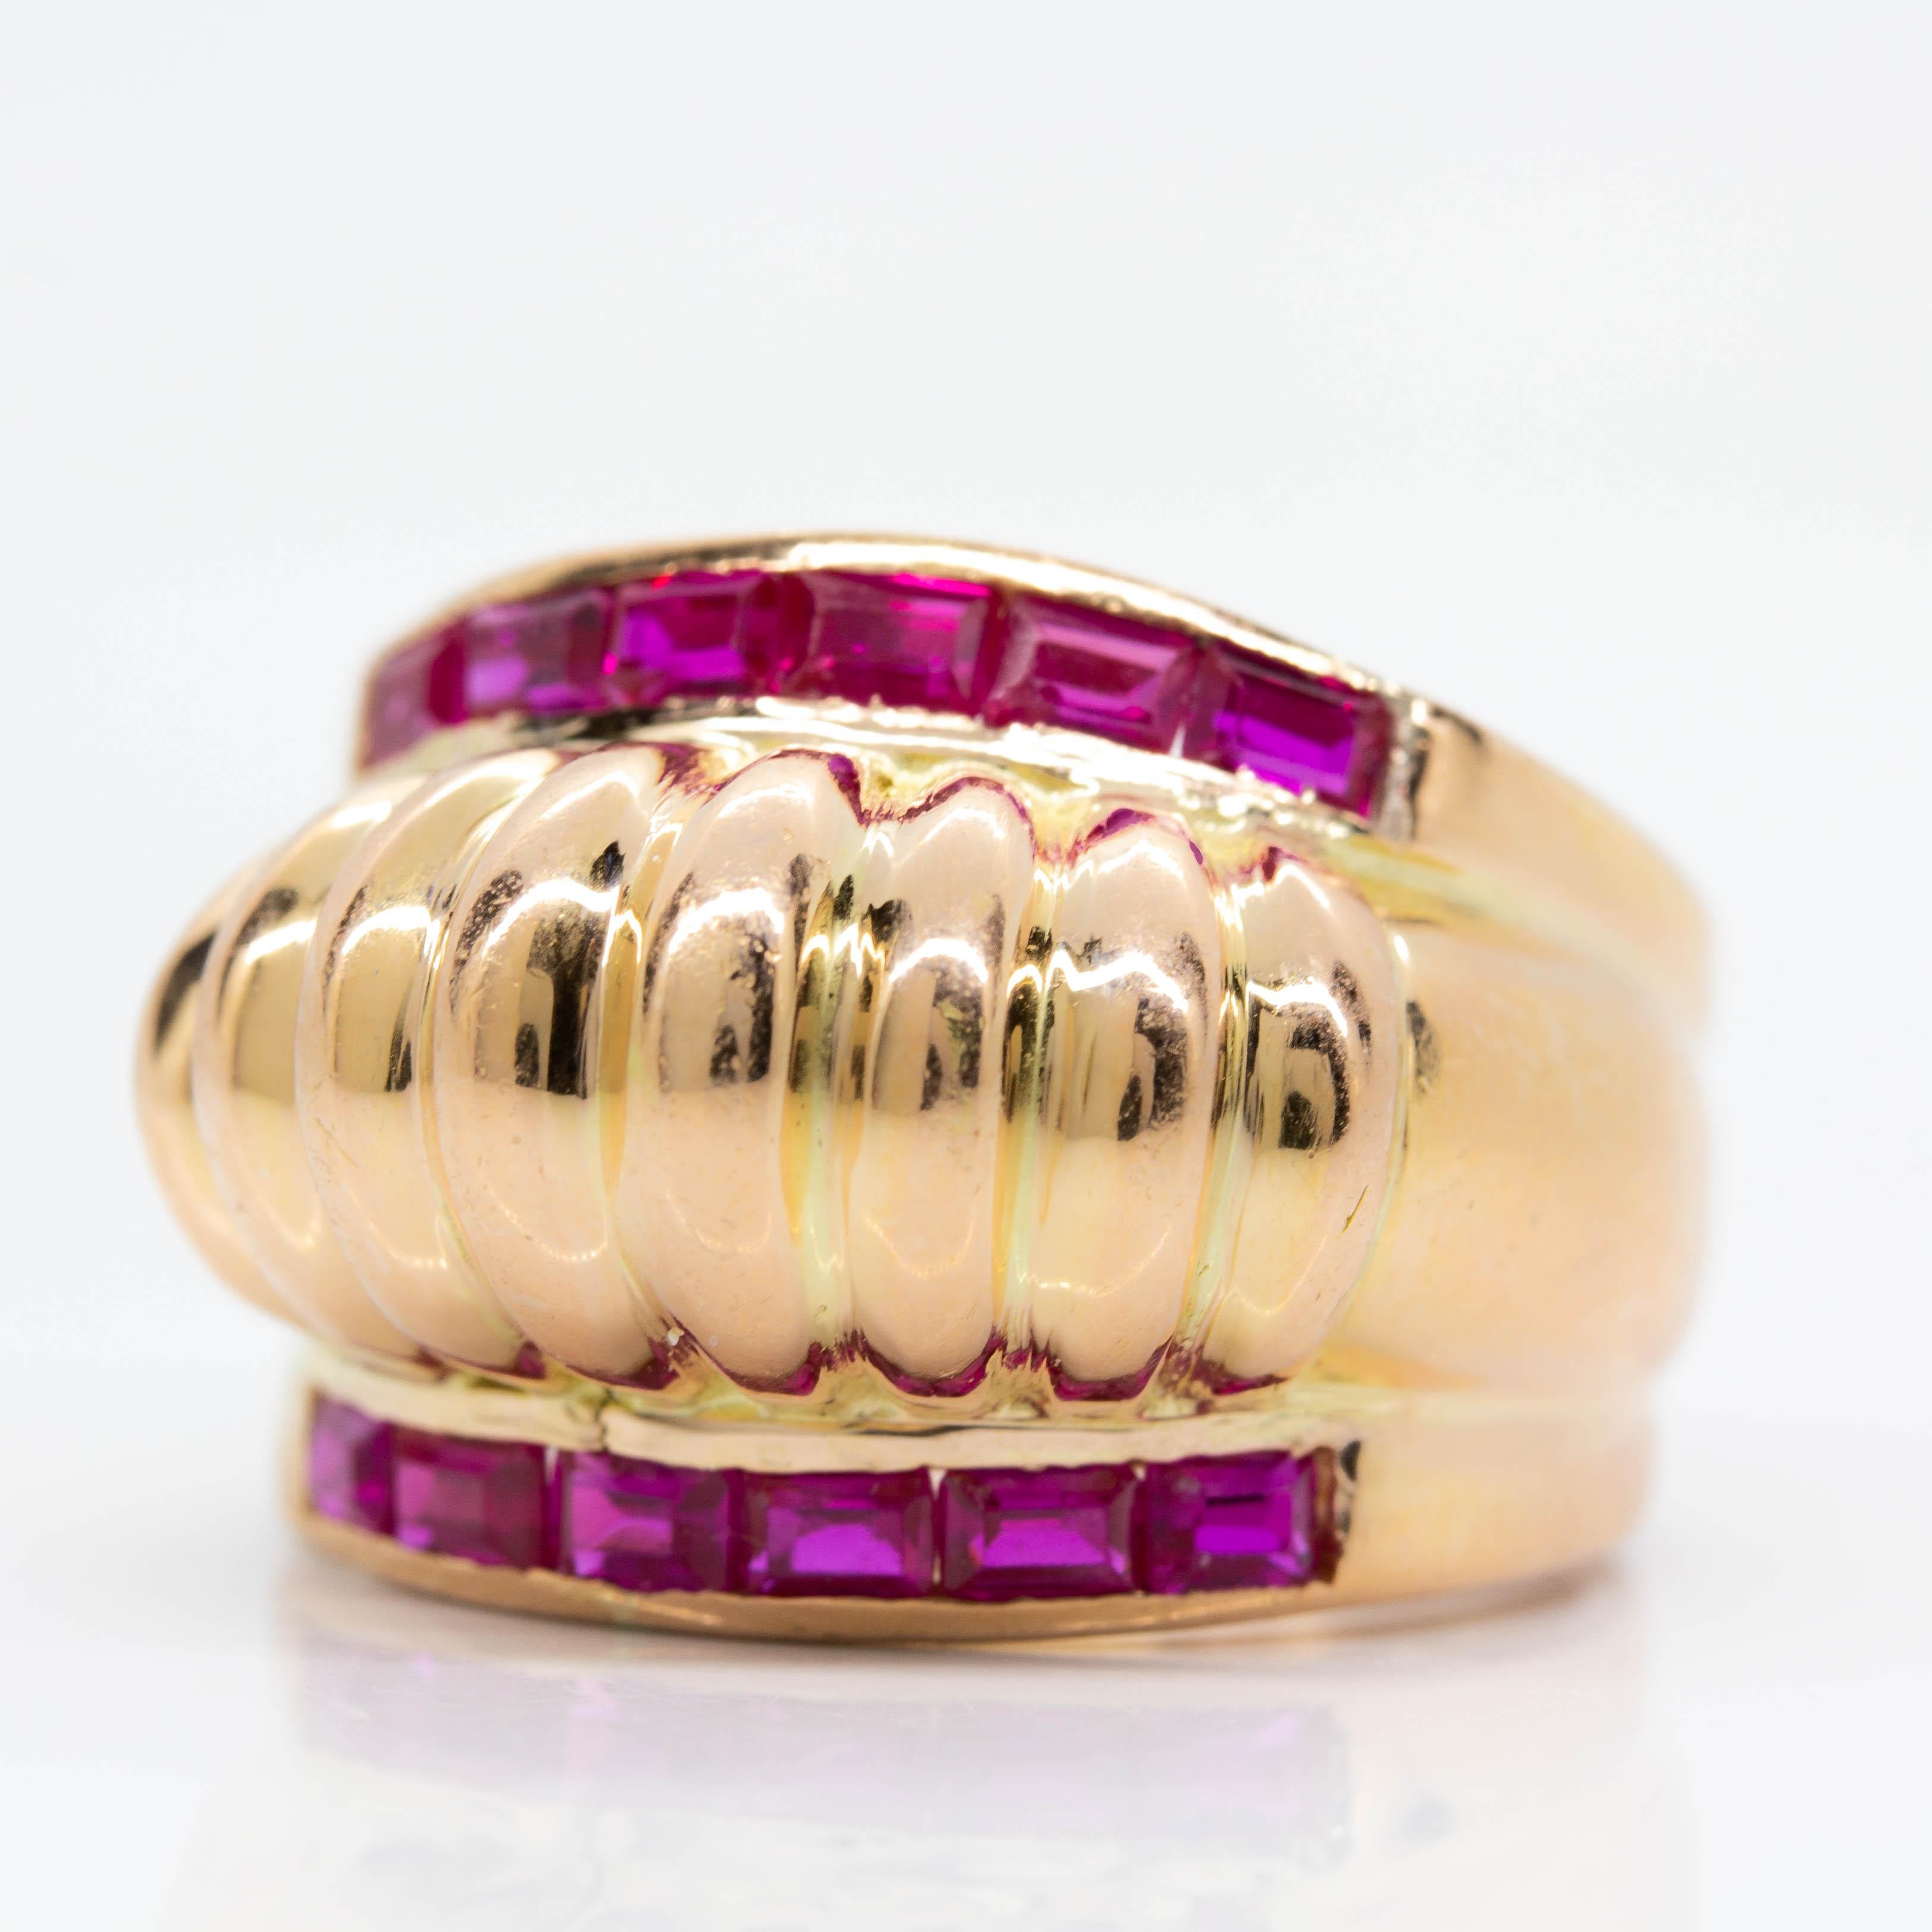 Original Retro Style Ruby Ring In Excellent Condition For Sale In Miami, FL